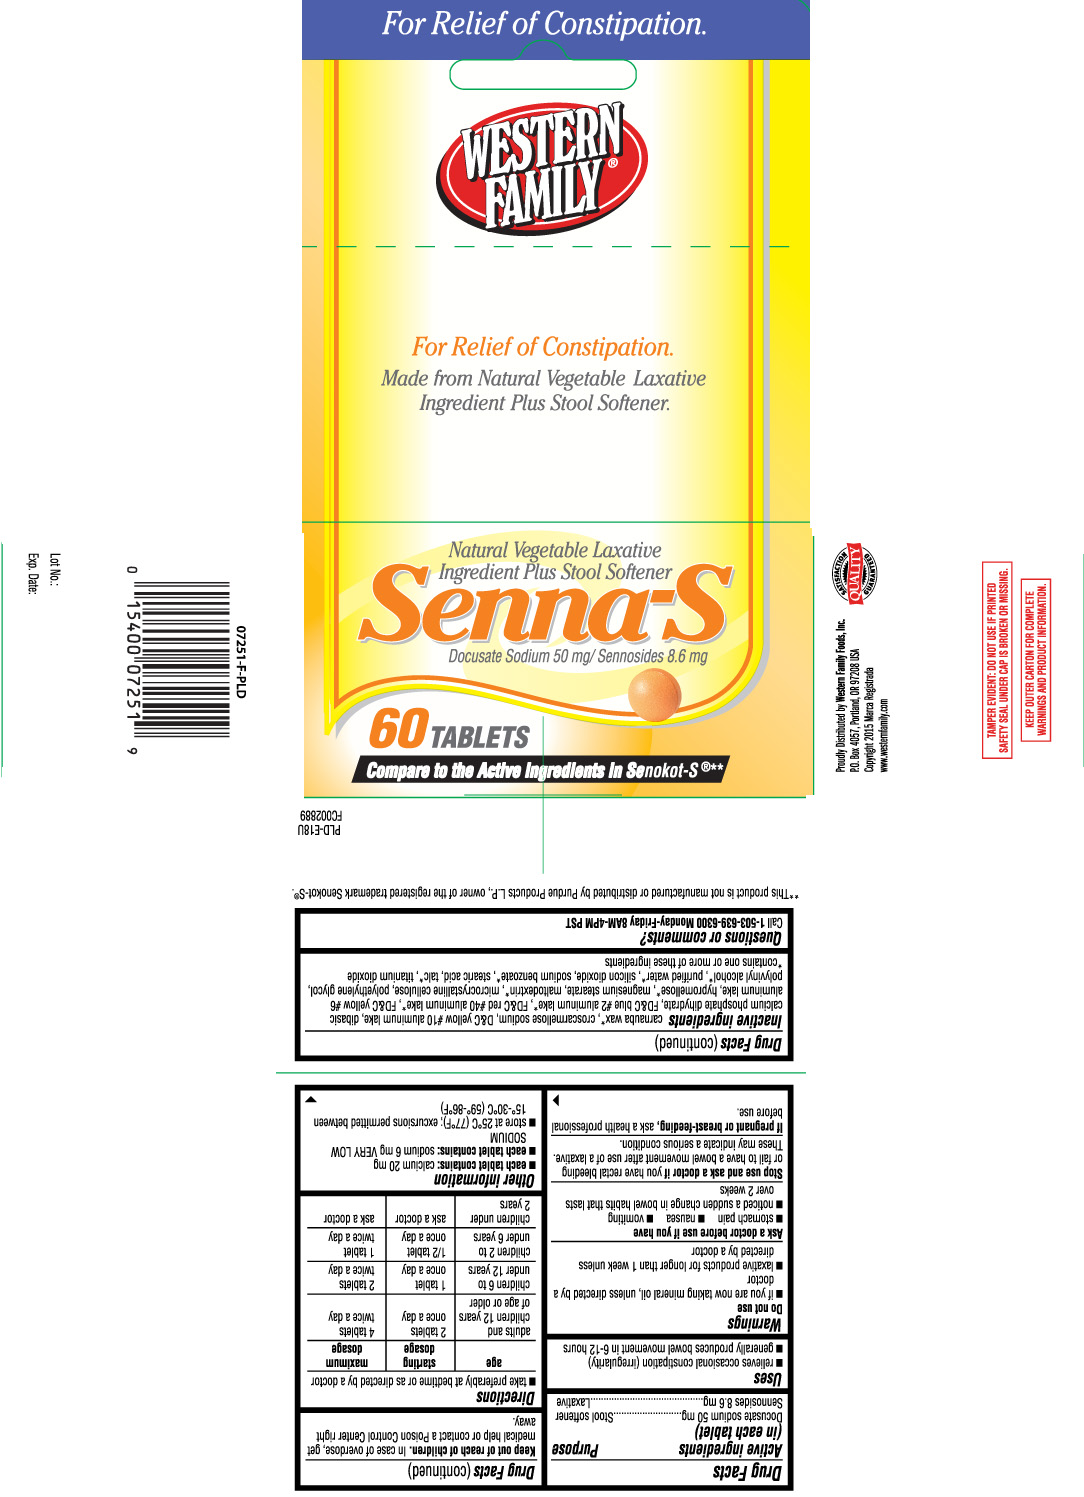 Docusate sodium 50mg Sennosides 8.6mg